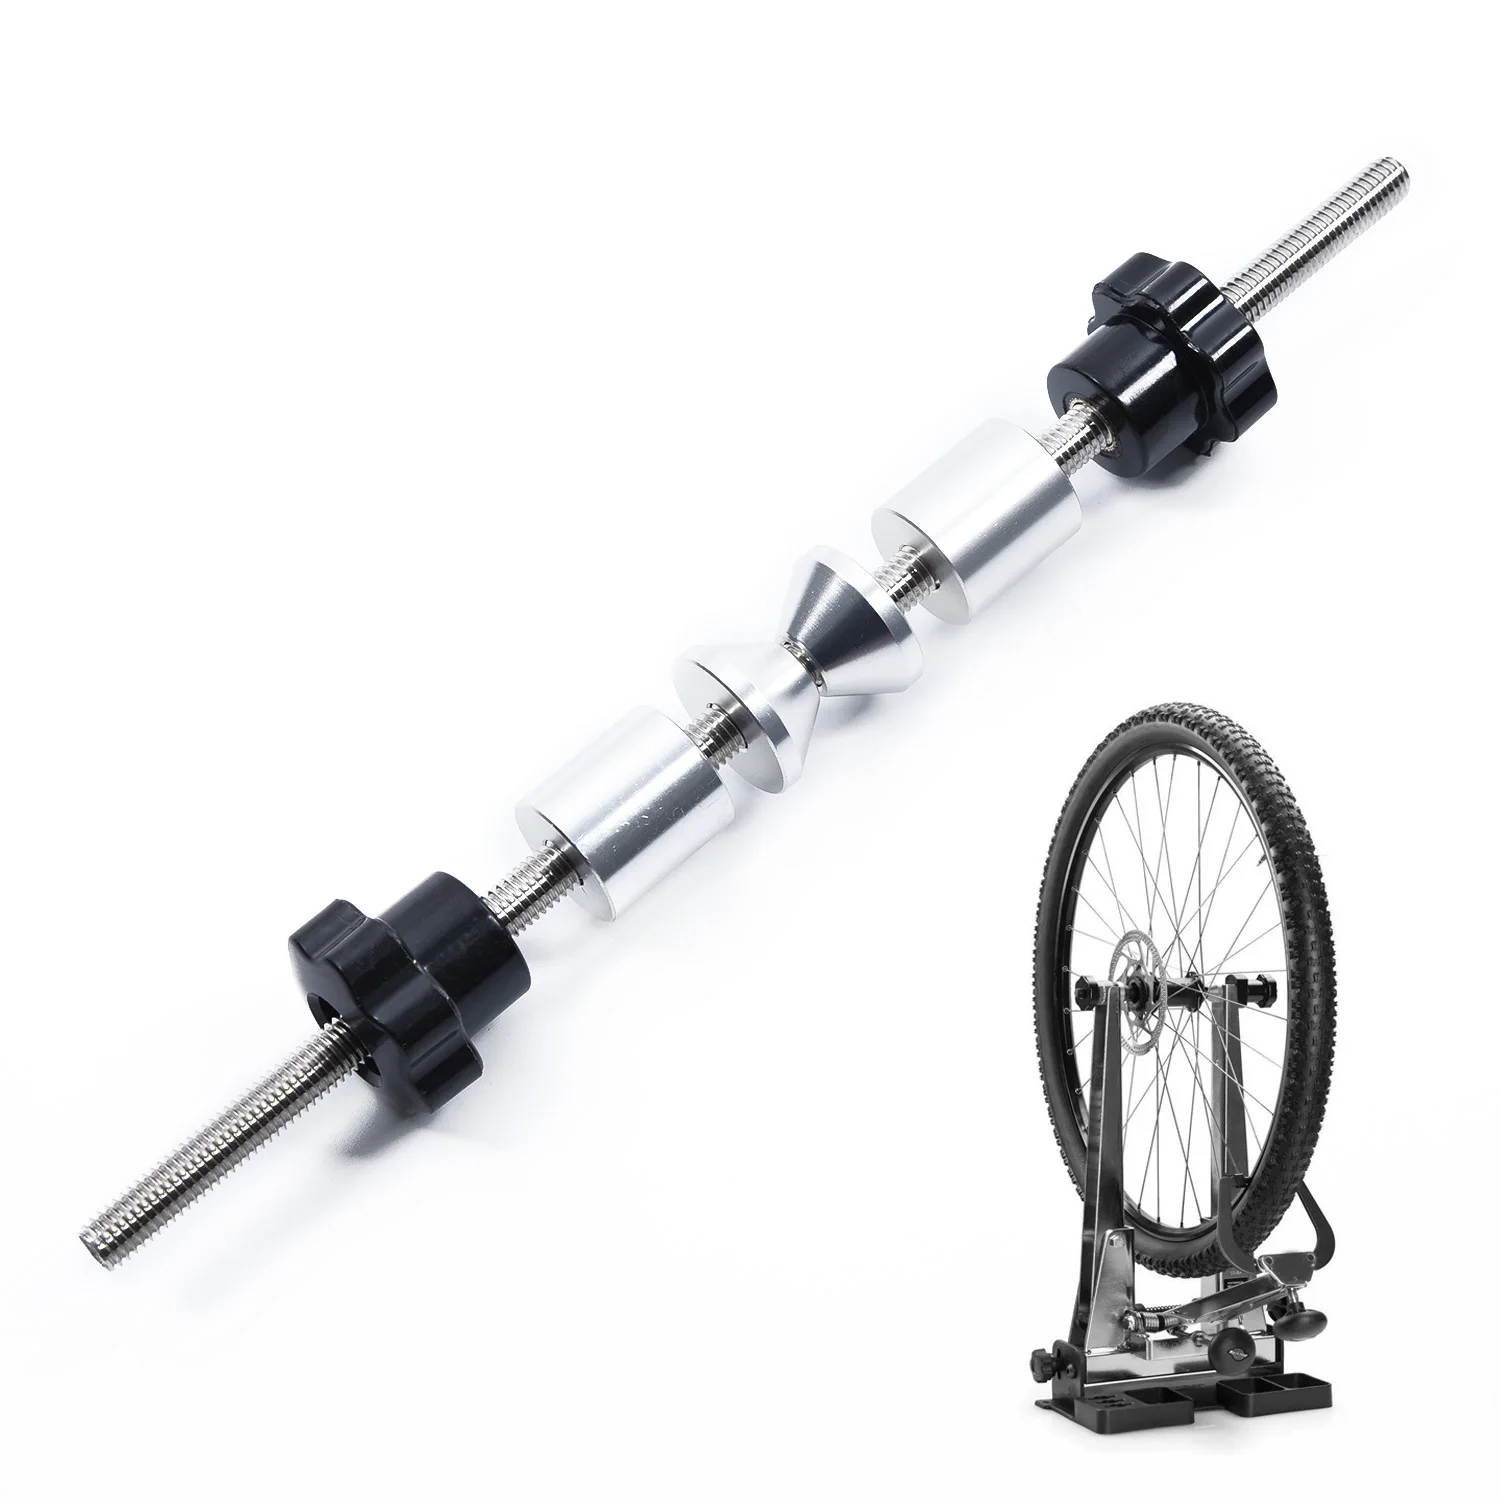 1*Bike Thru Axle Adaptor Wheel Repair Truing Stand Platform Set Up Mechanic Tool Muti-Tools Bicycle Cycling Parts